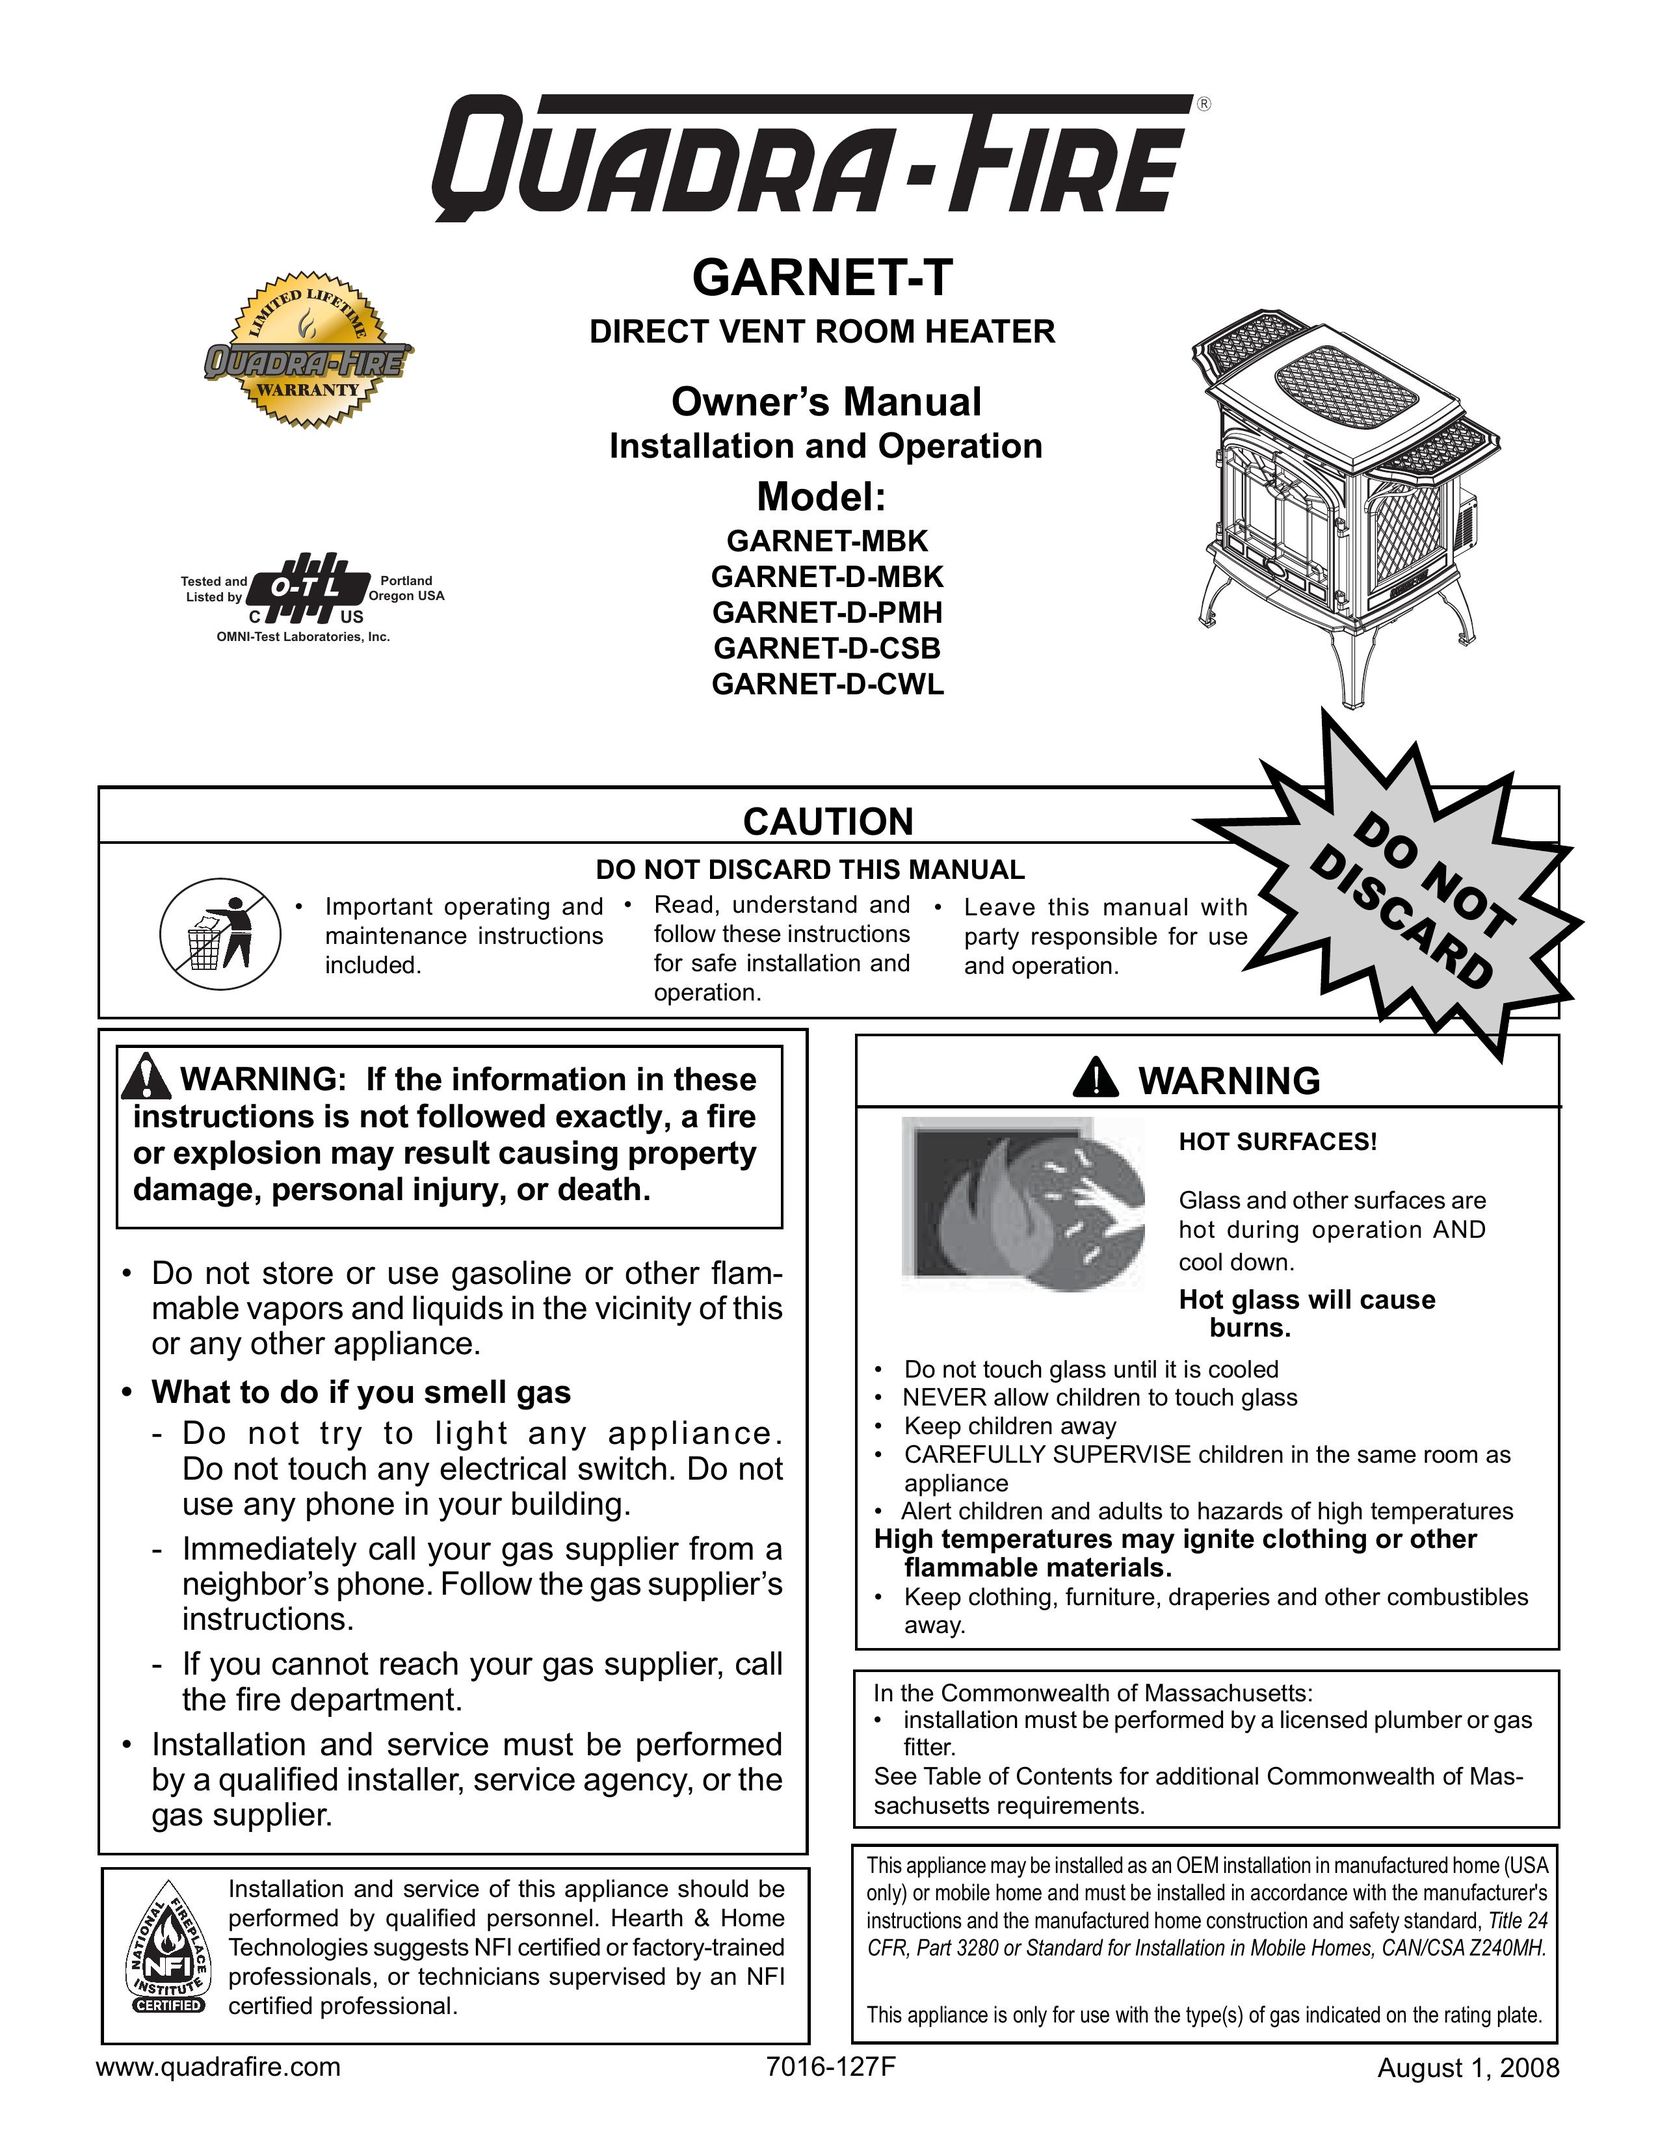 Quadra-Fire GARNET-D-CSB Electric Heater User Manual